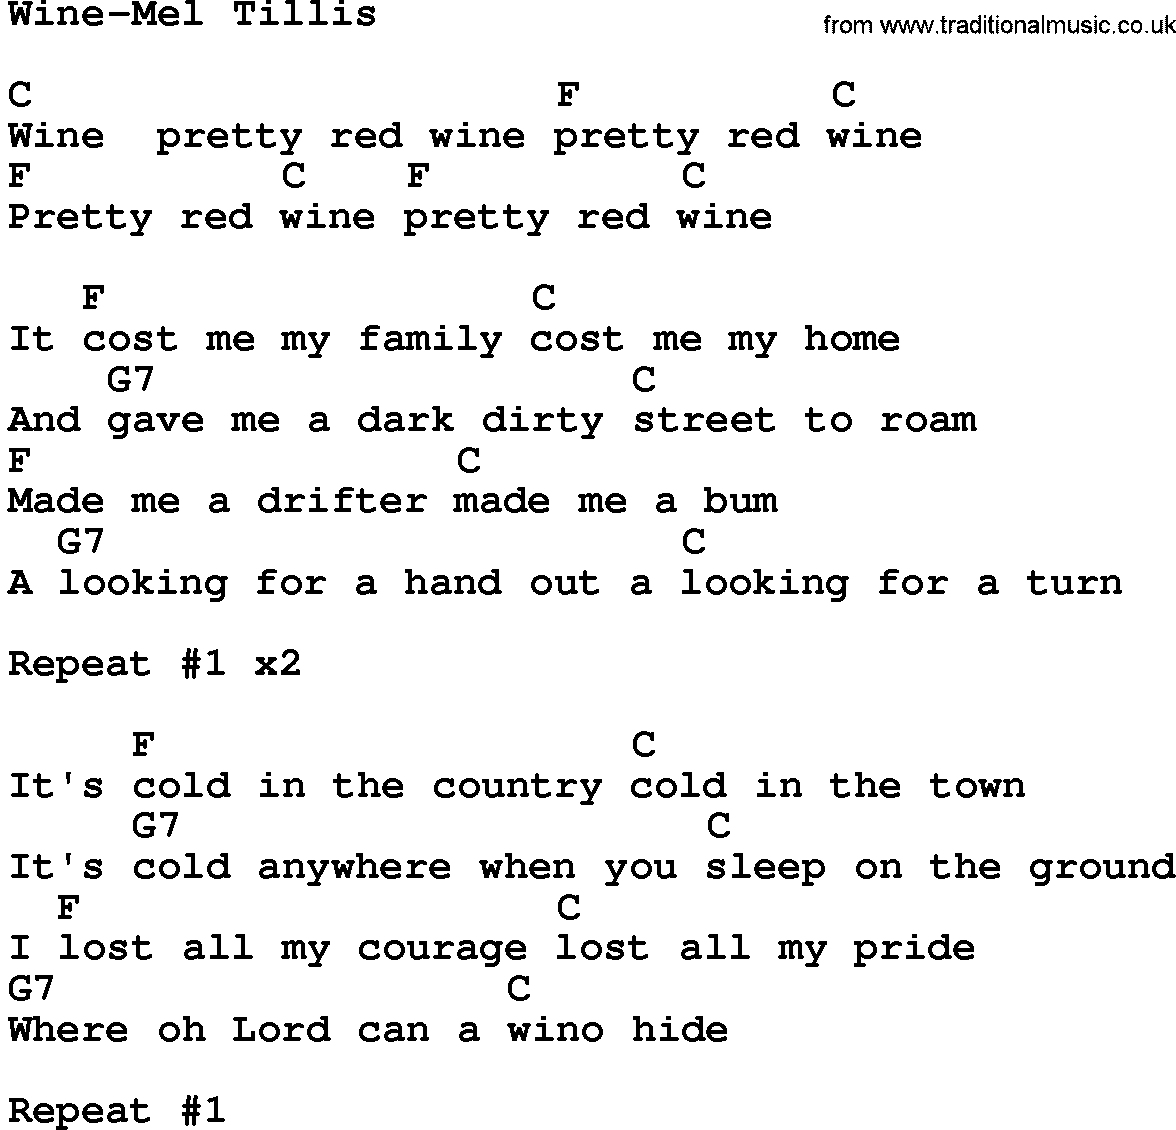 Country music song: Wine-Mel Tillis lyrics and chords